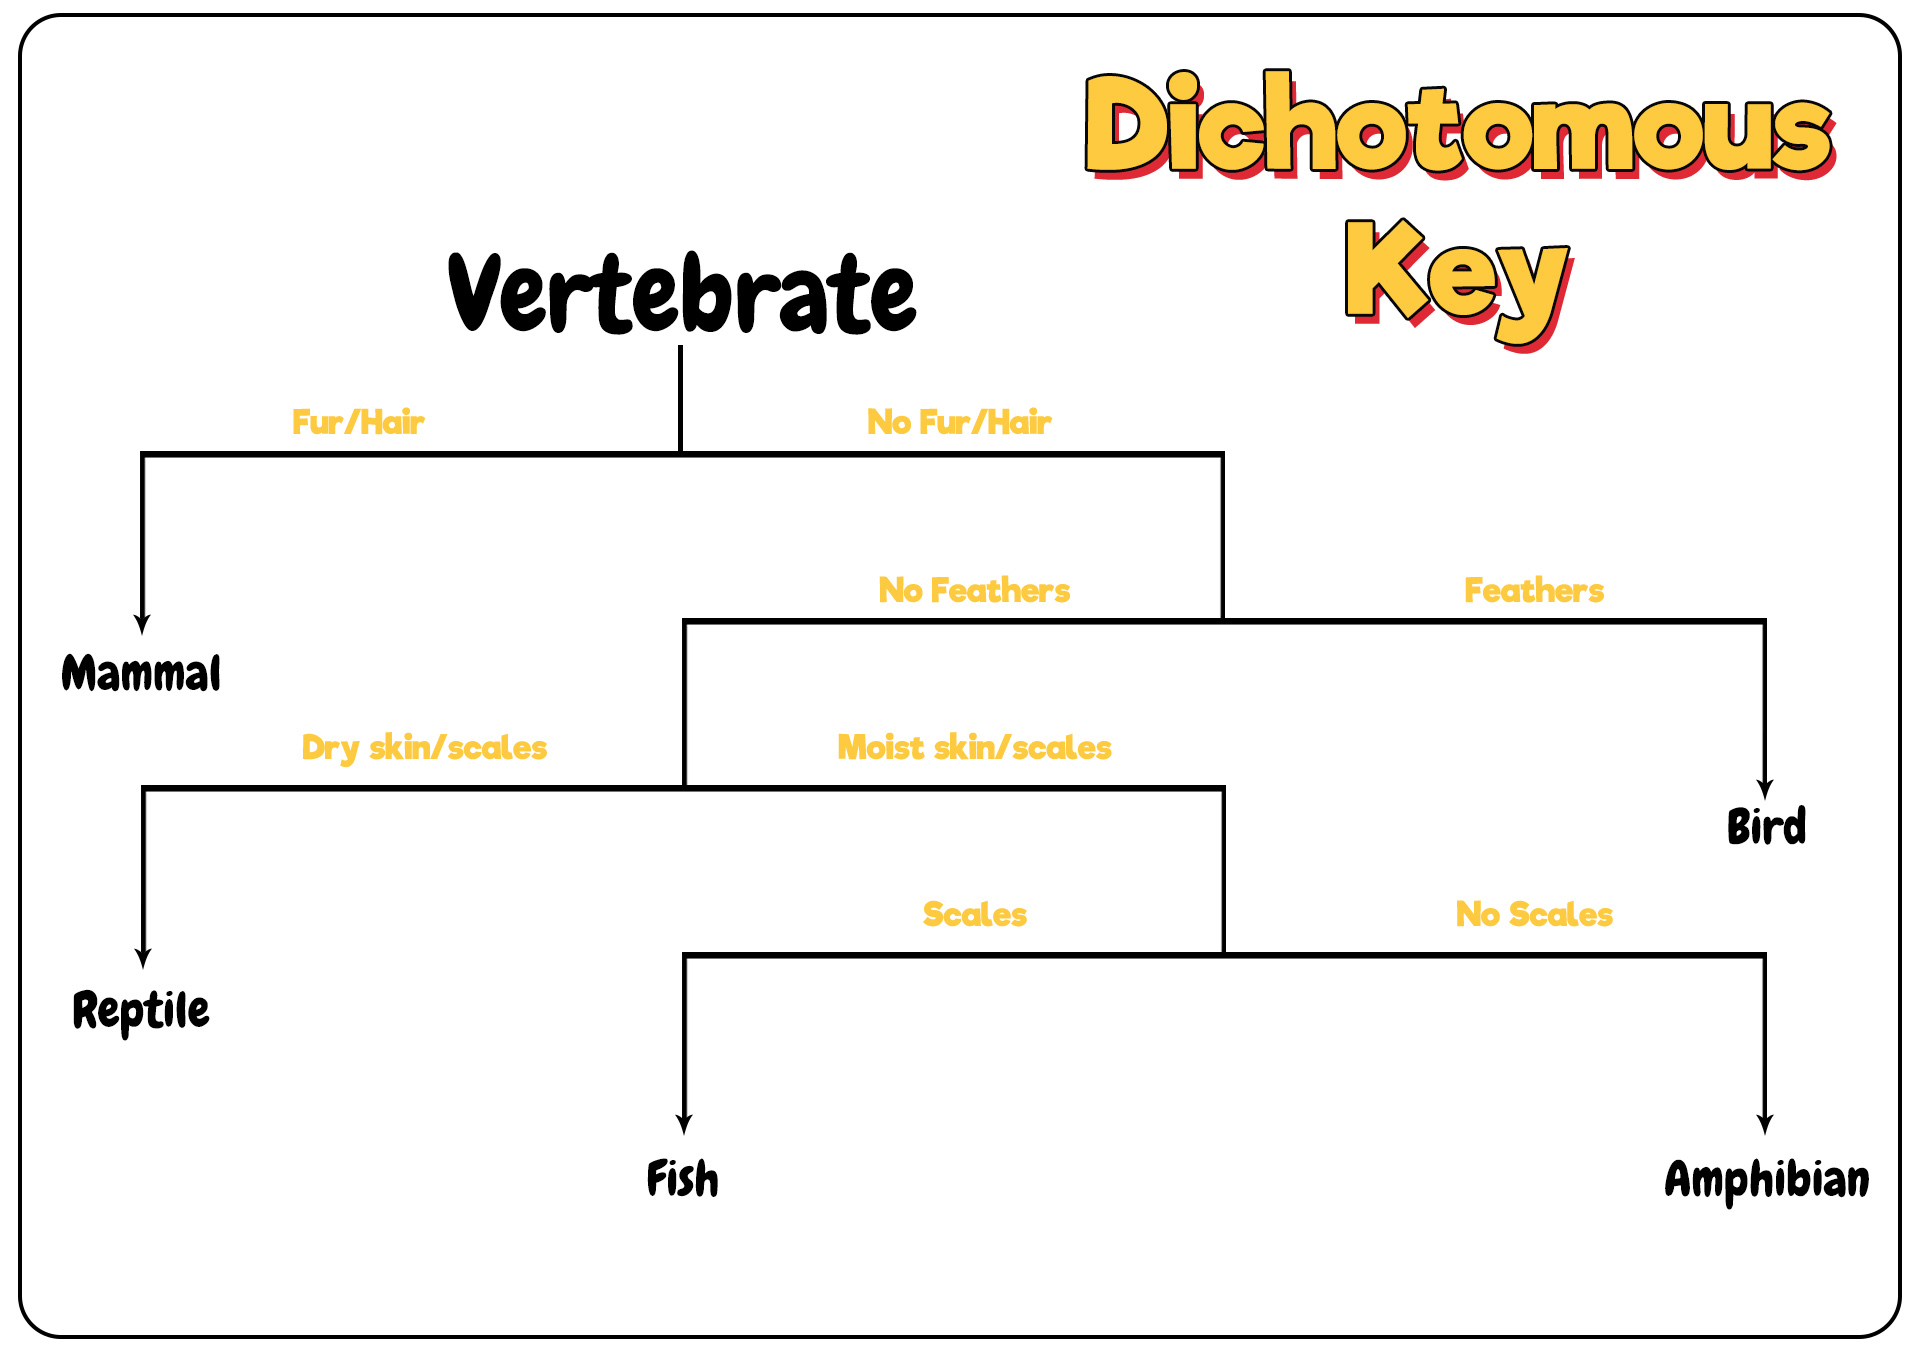 Dichotomous Key Activities Image